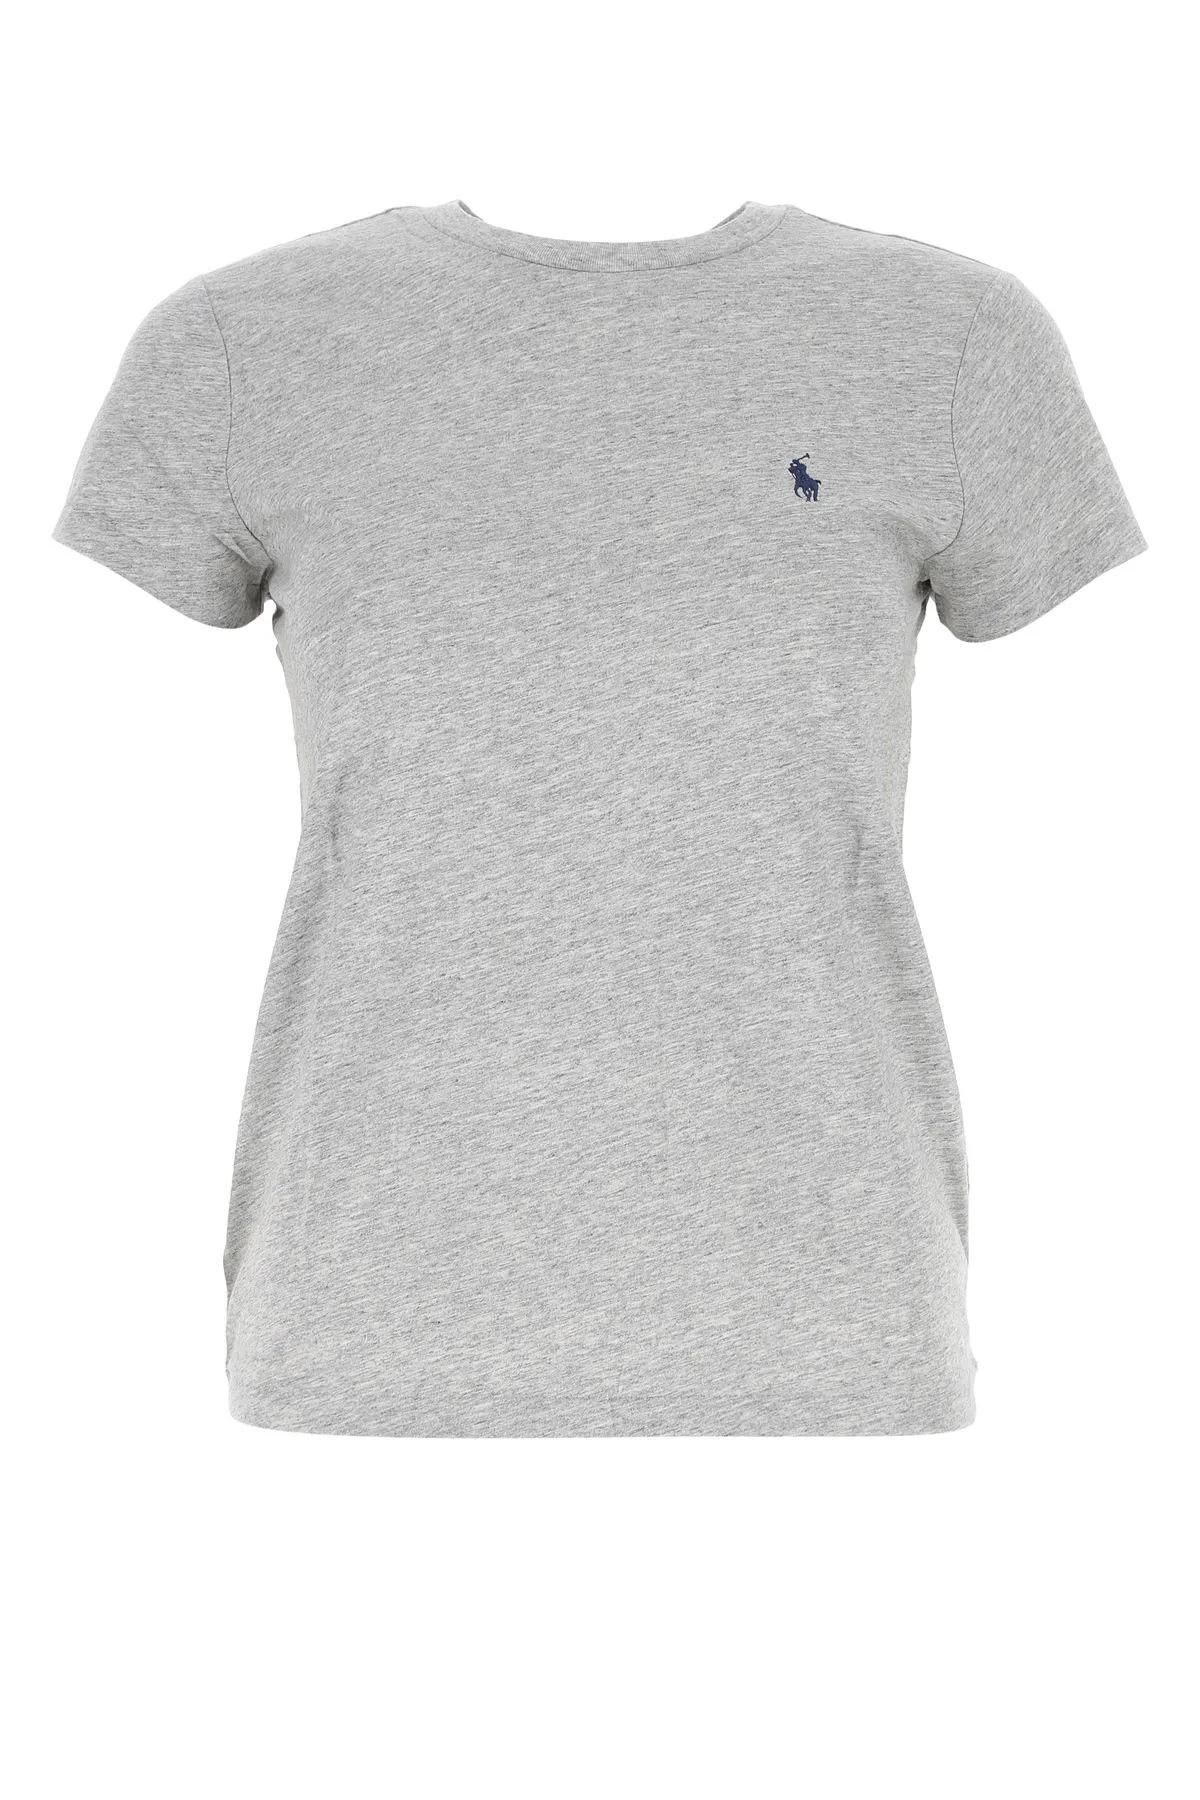 Ralph Lauren Melange Grey Cotton T-shirt In Cobblestone Heather